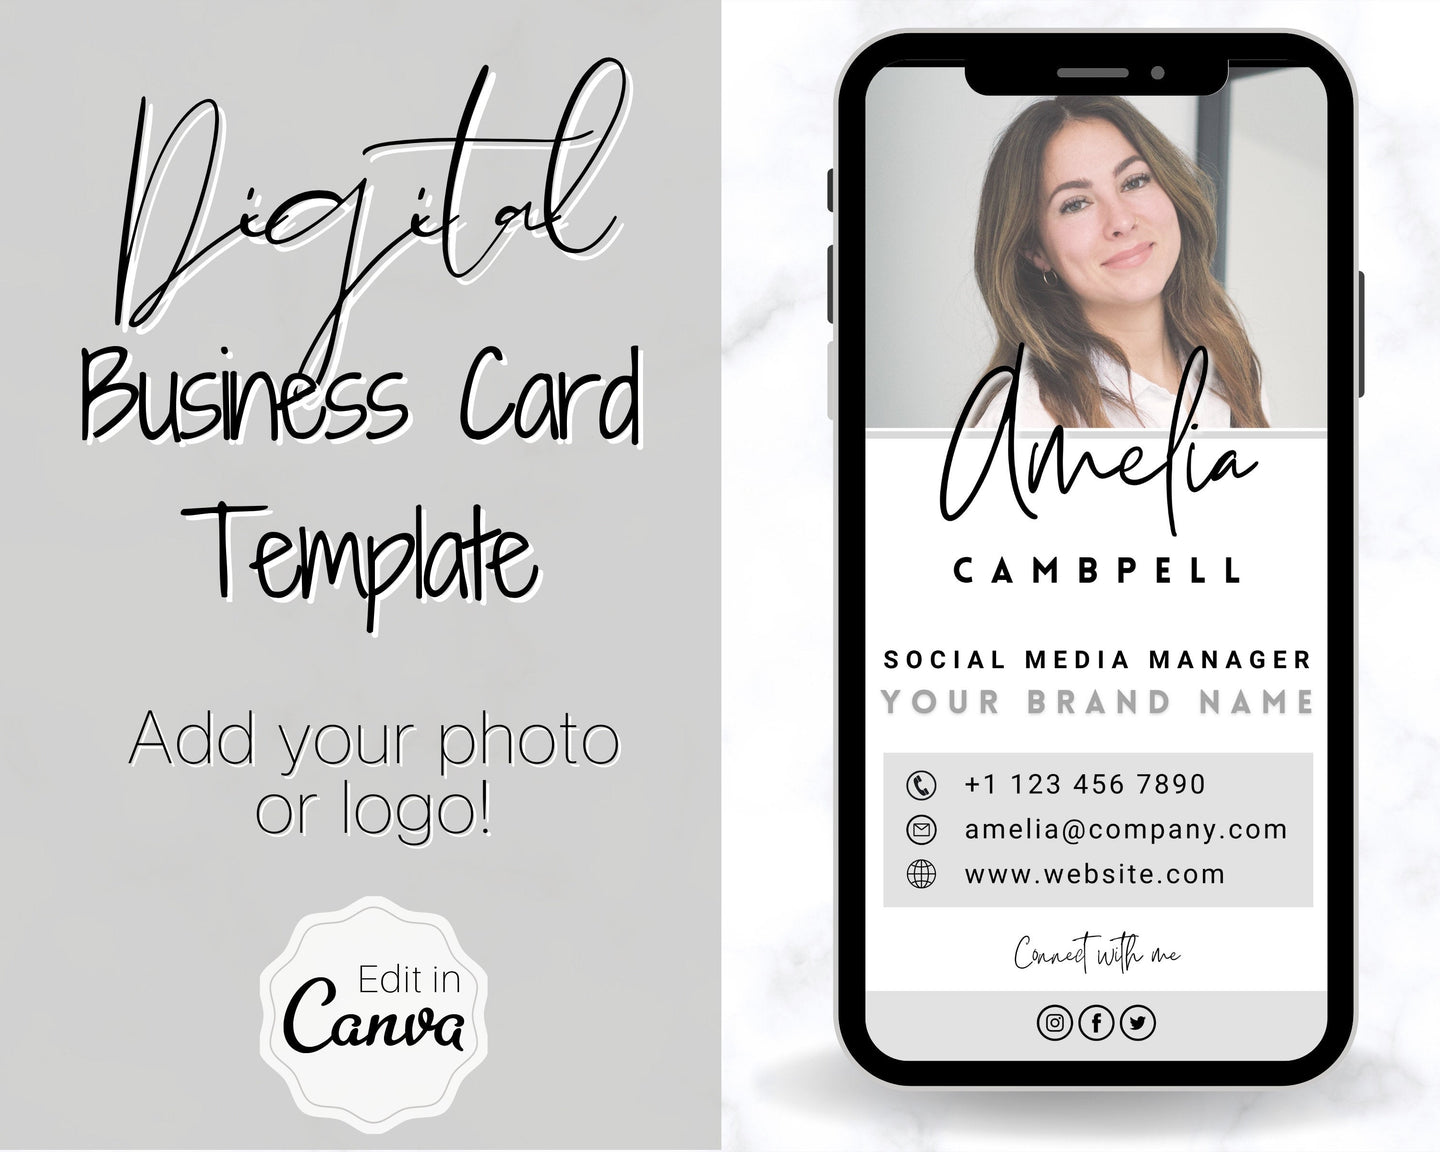 Digital Business Card Template. DIY add logo & photo! Editable Canva Design. Modern, Realtor Marketing, Real Estate, Realty Professional | Mono Style 3